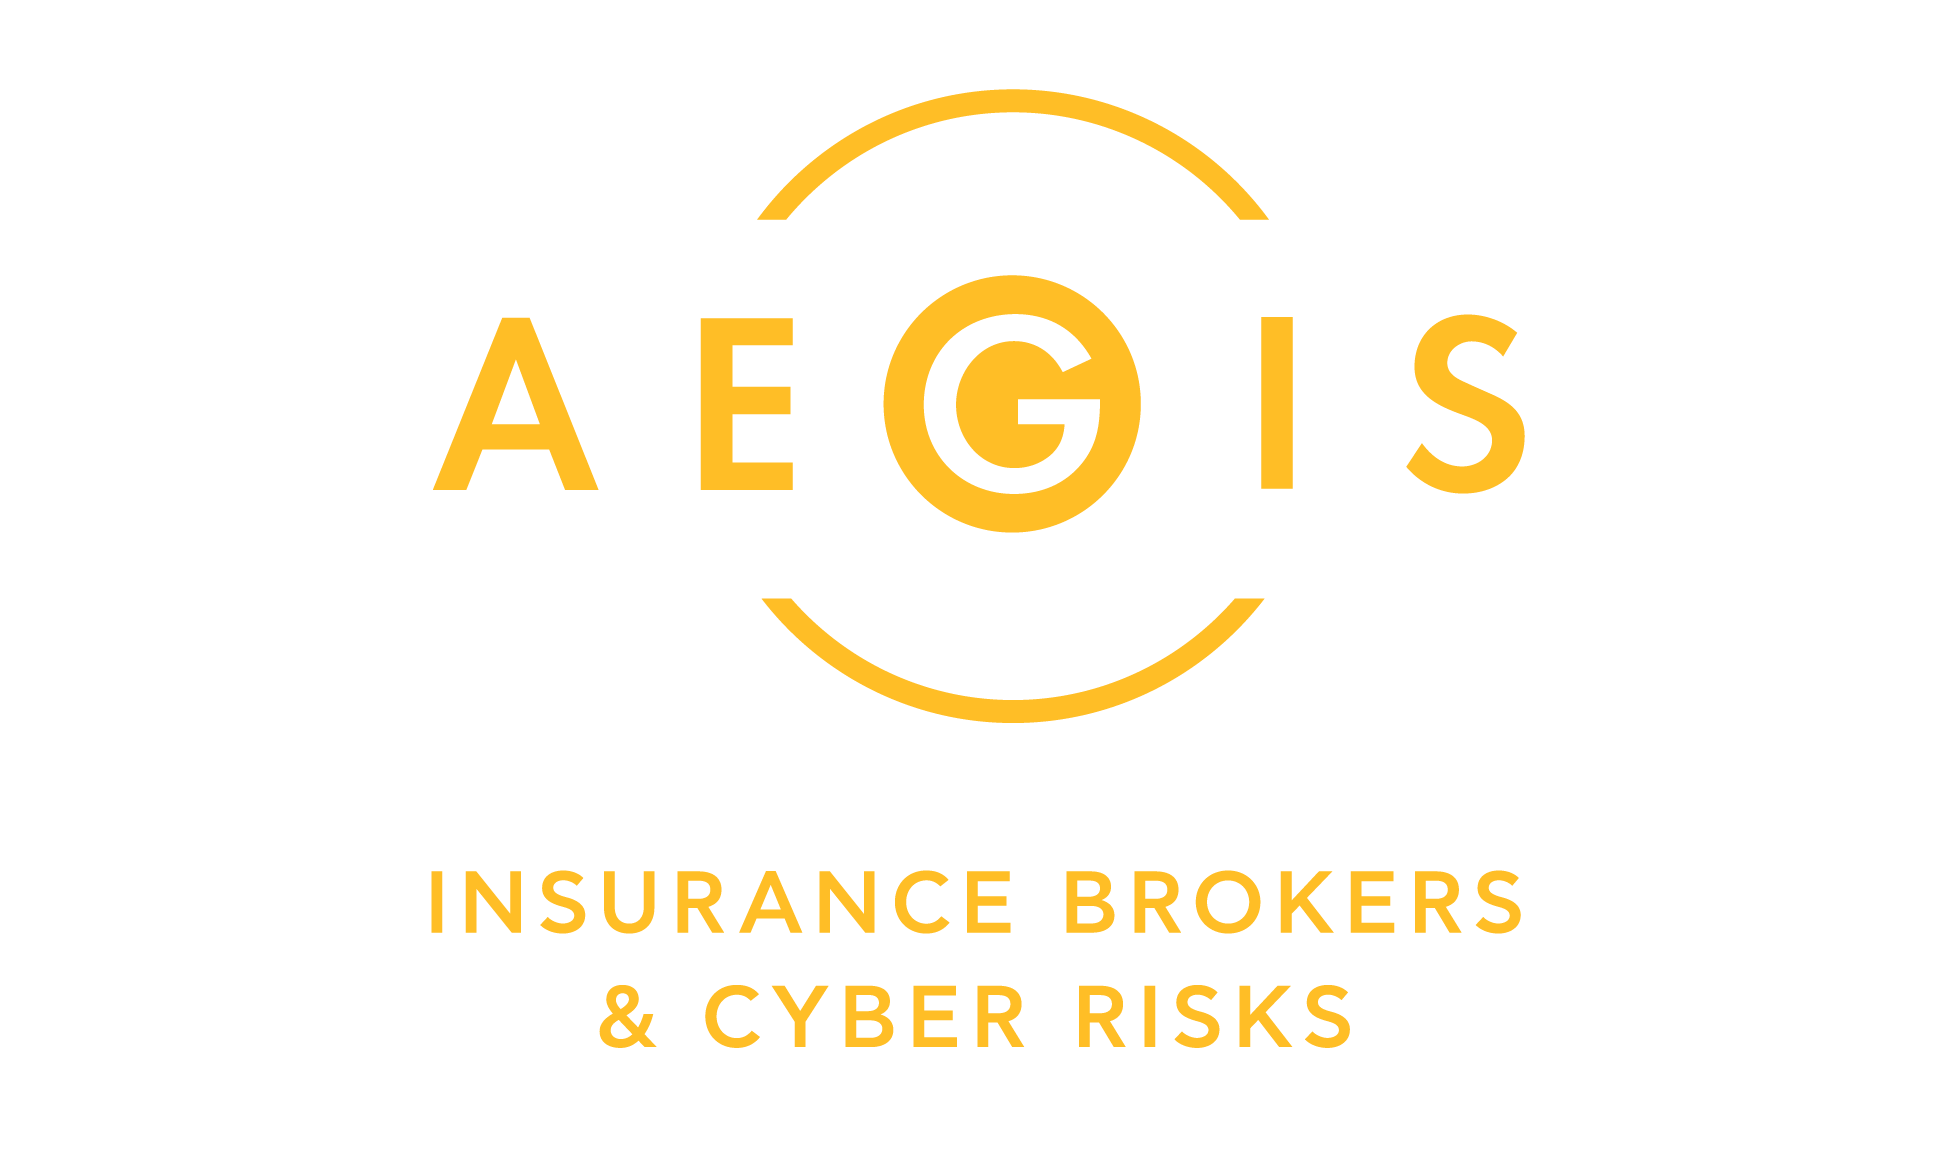 Aegis Insurance Brokers & Cyber Risks